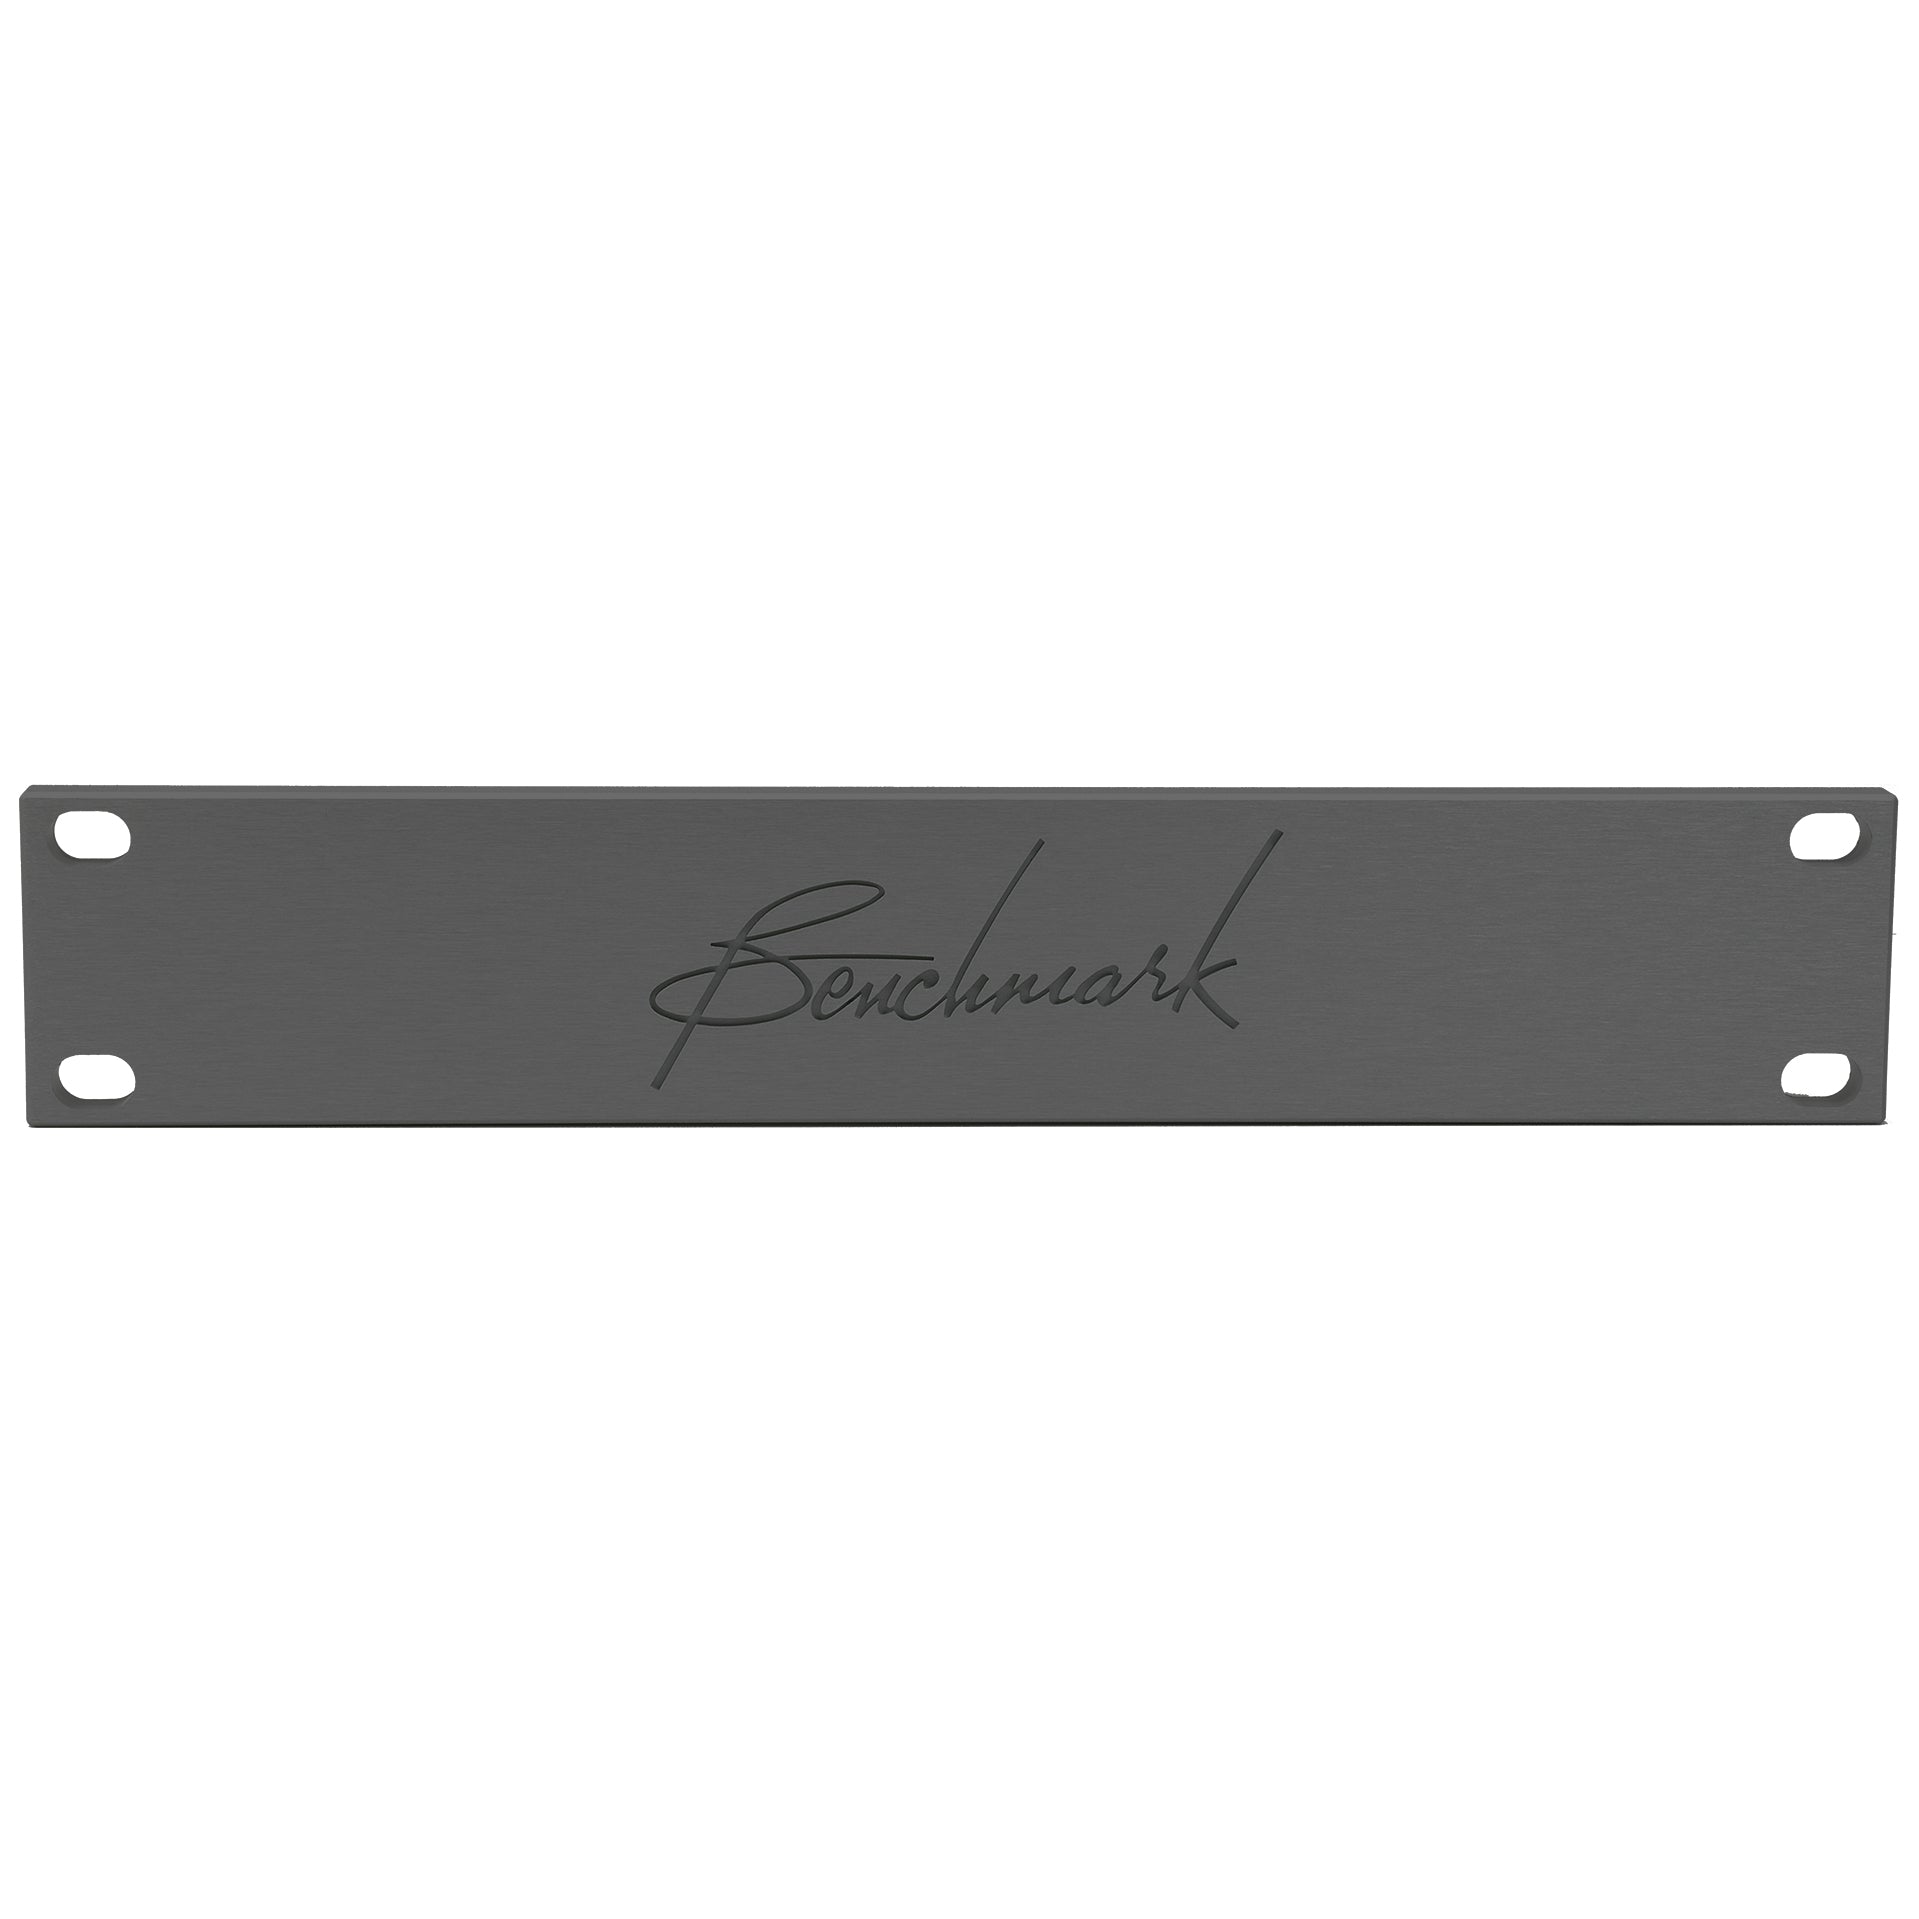 Premium Black Blank Plate with Engraved Benchmark Logo